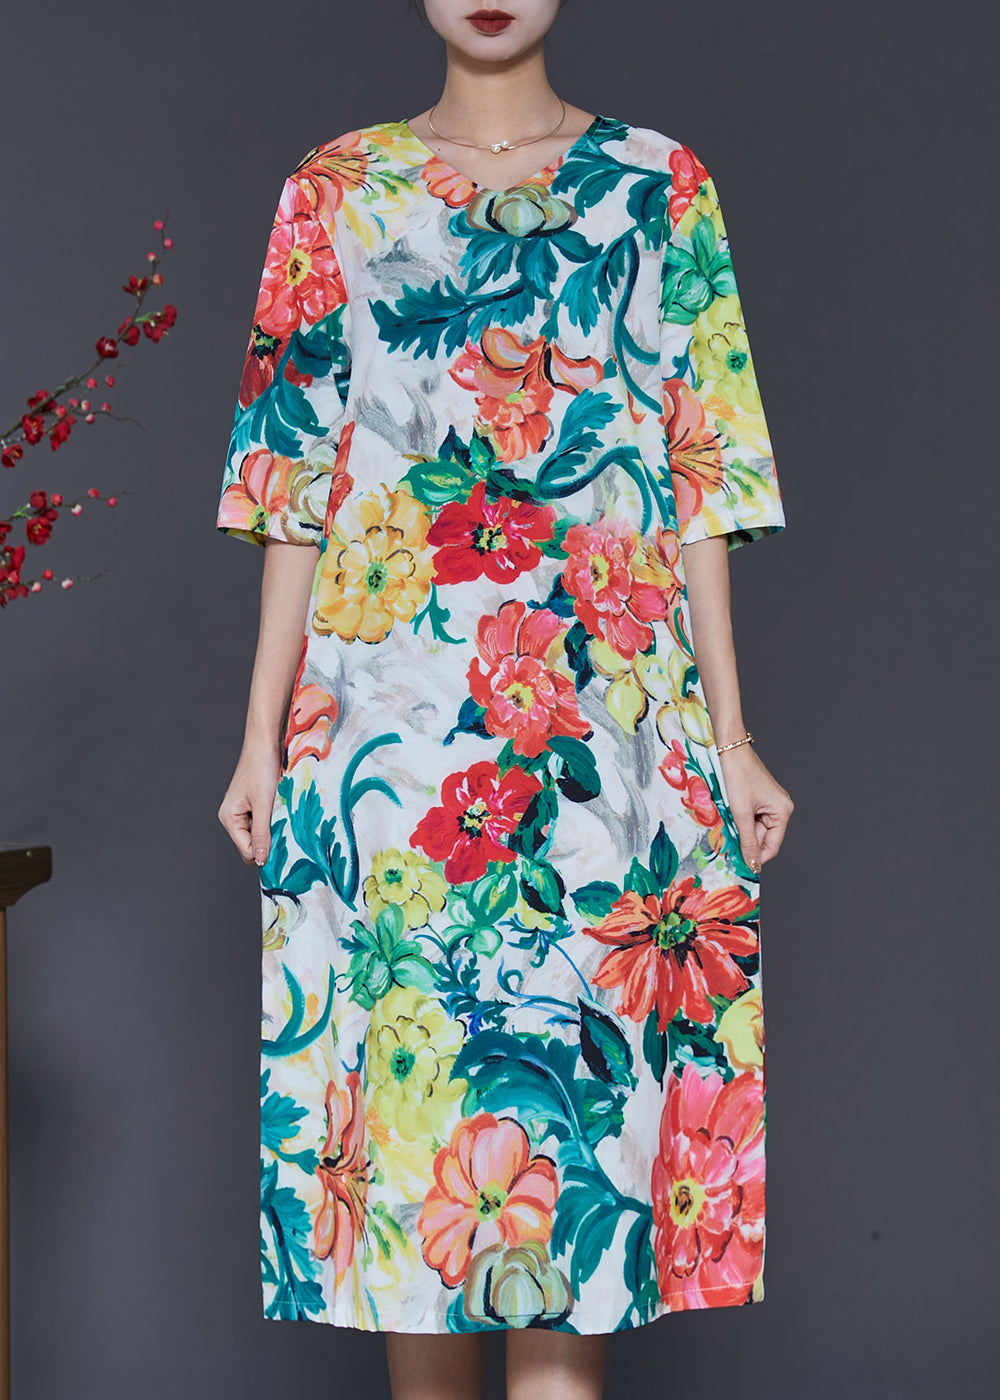 French V Neck Floral Print Silk Dress Half Sleeve